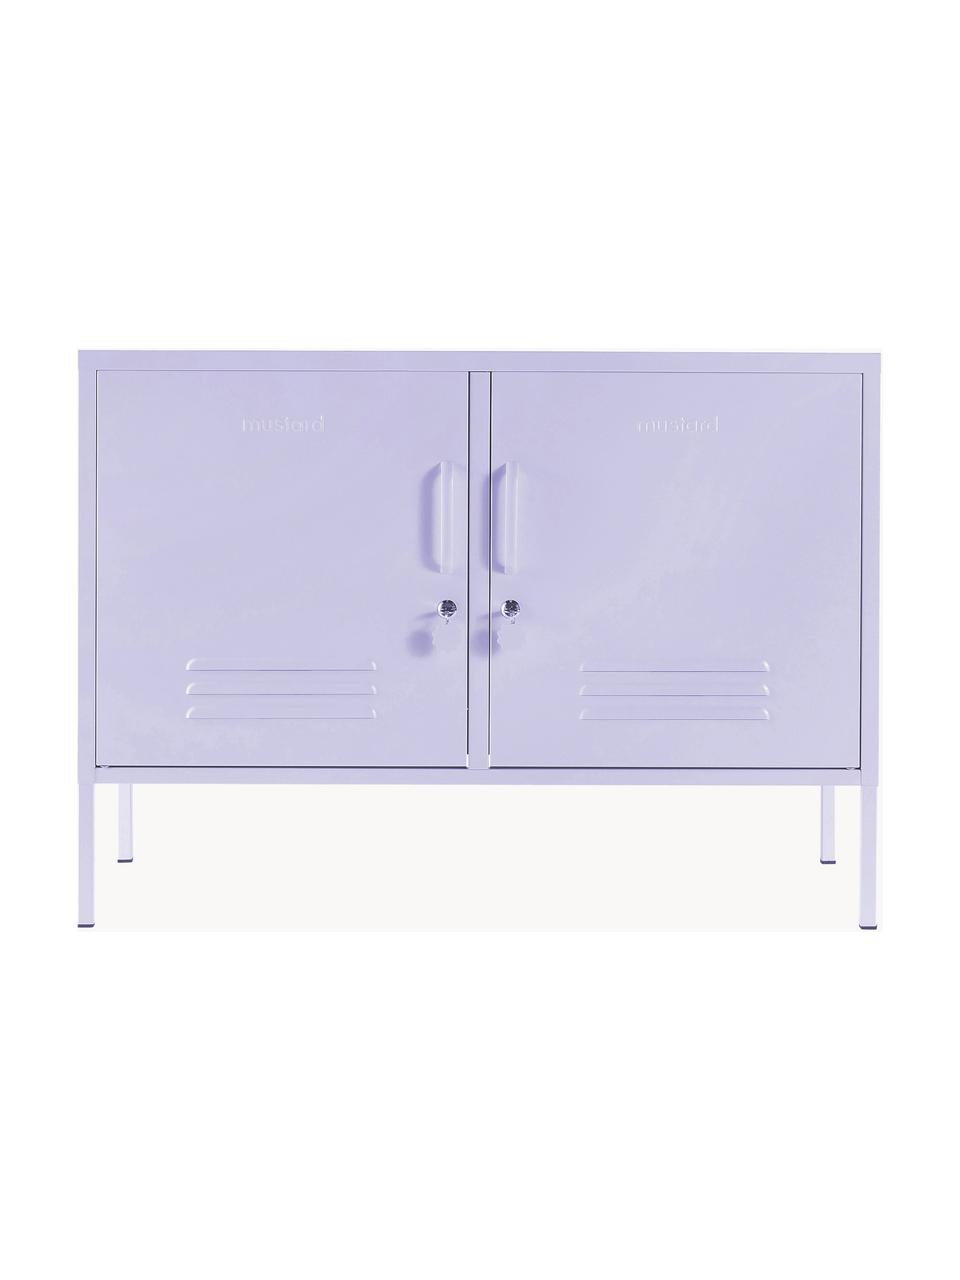 Metalen dressoir The Lowdown, Staal, gepoedercoat, Lavendel, B 100 x H 72 cm